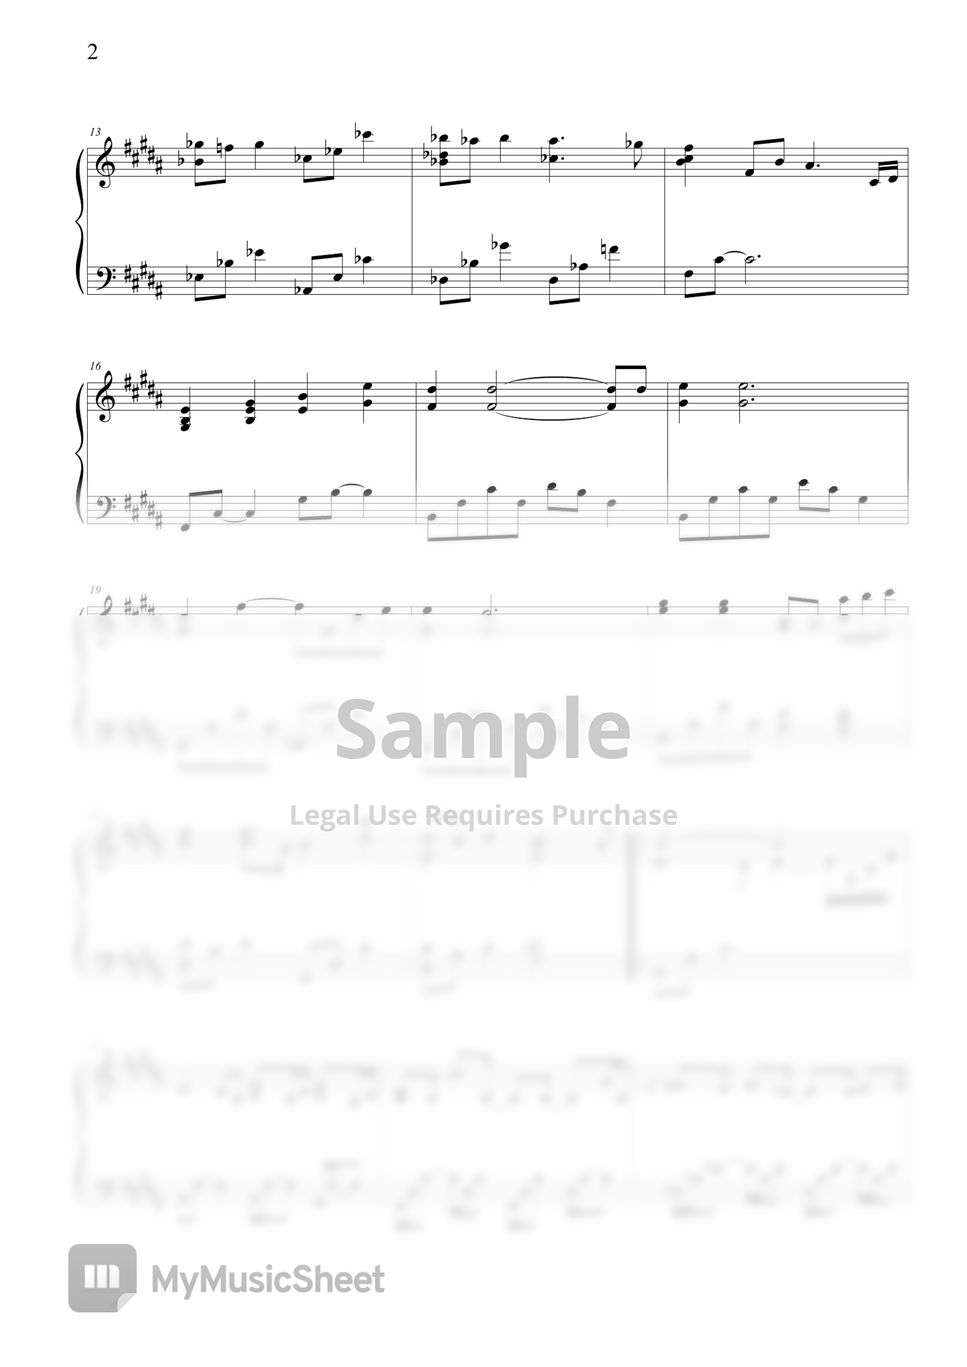 Hwan ho Jung - 'Meet the Classic' Compilation Sheet Music (Piano Arrangement) (20 songs)